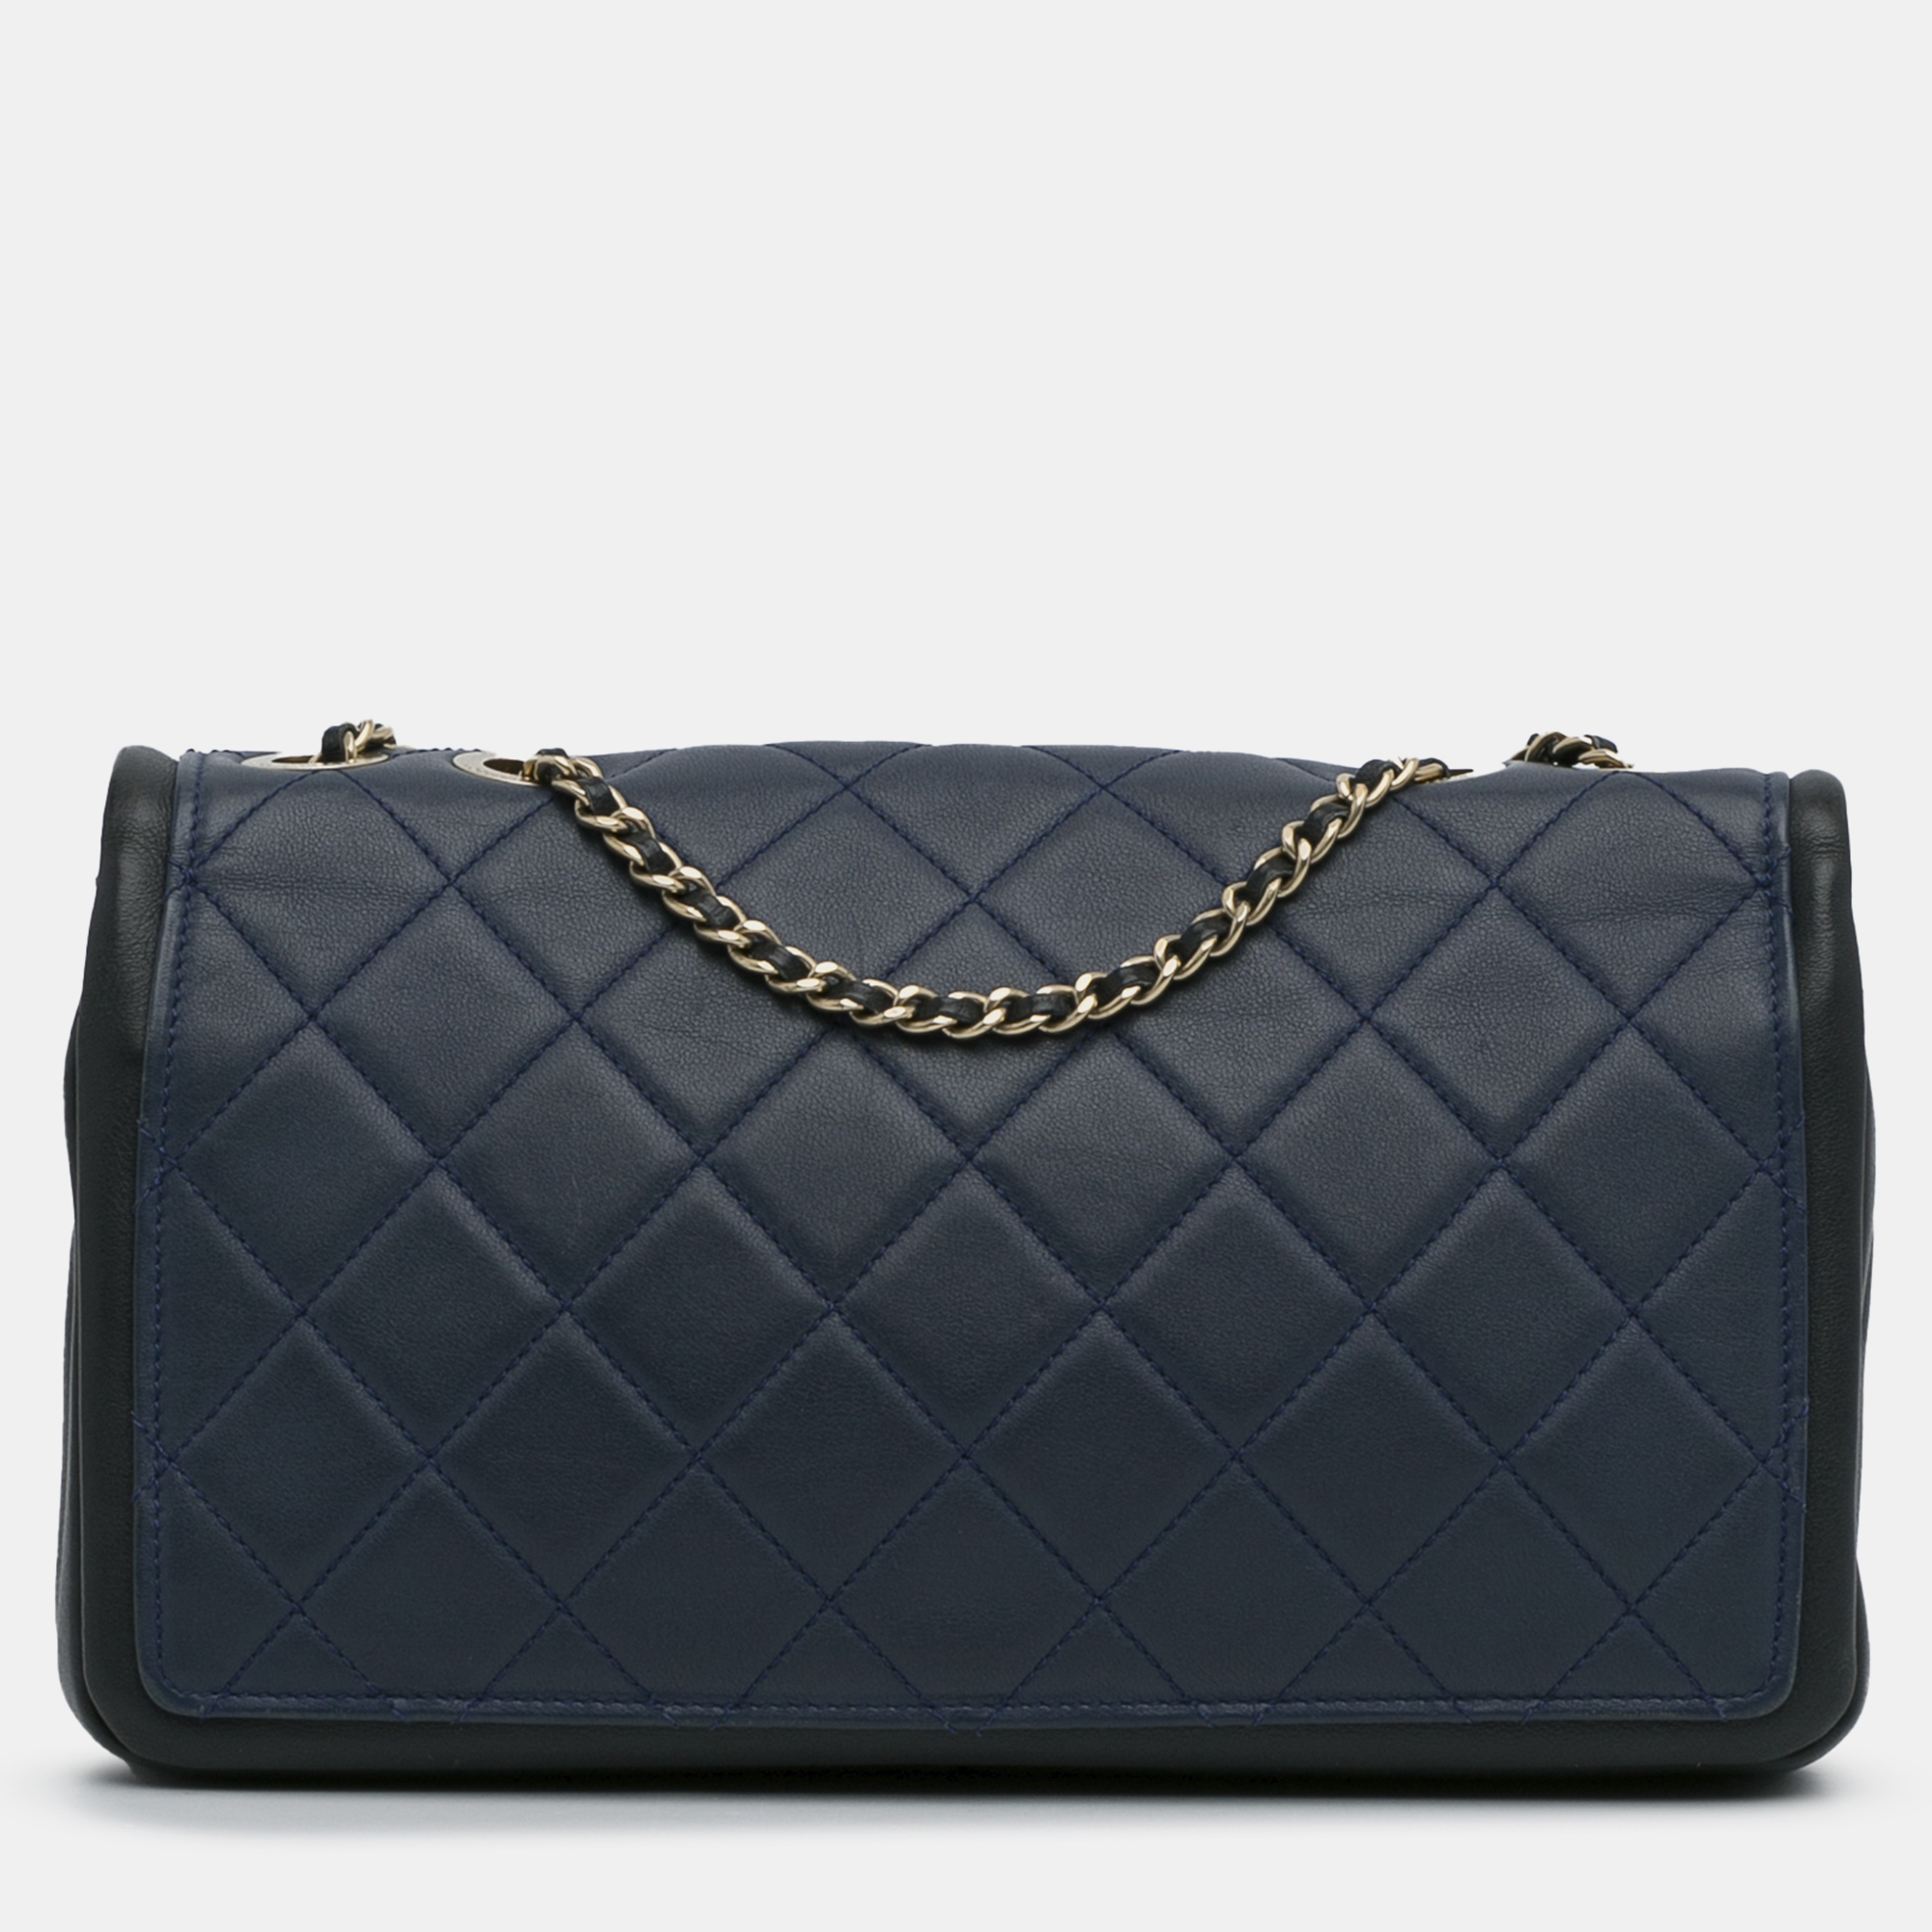 Chanel Blue Leather Medium Bicolor Graphic Flap Bag